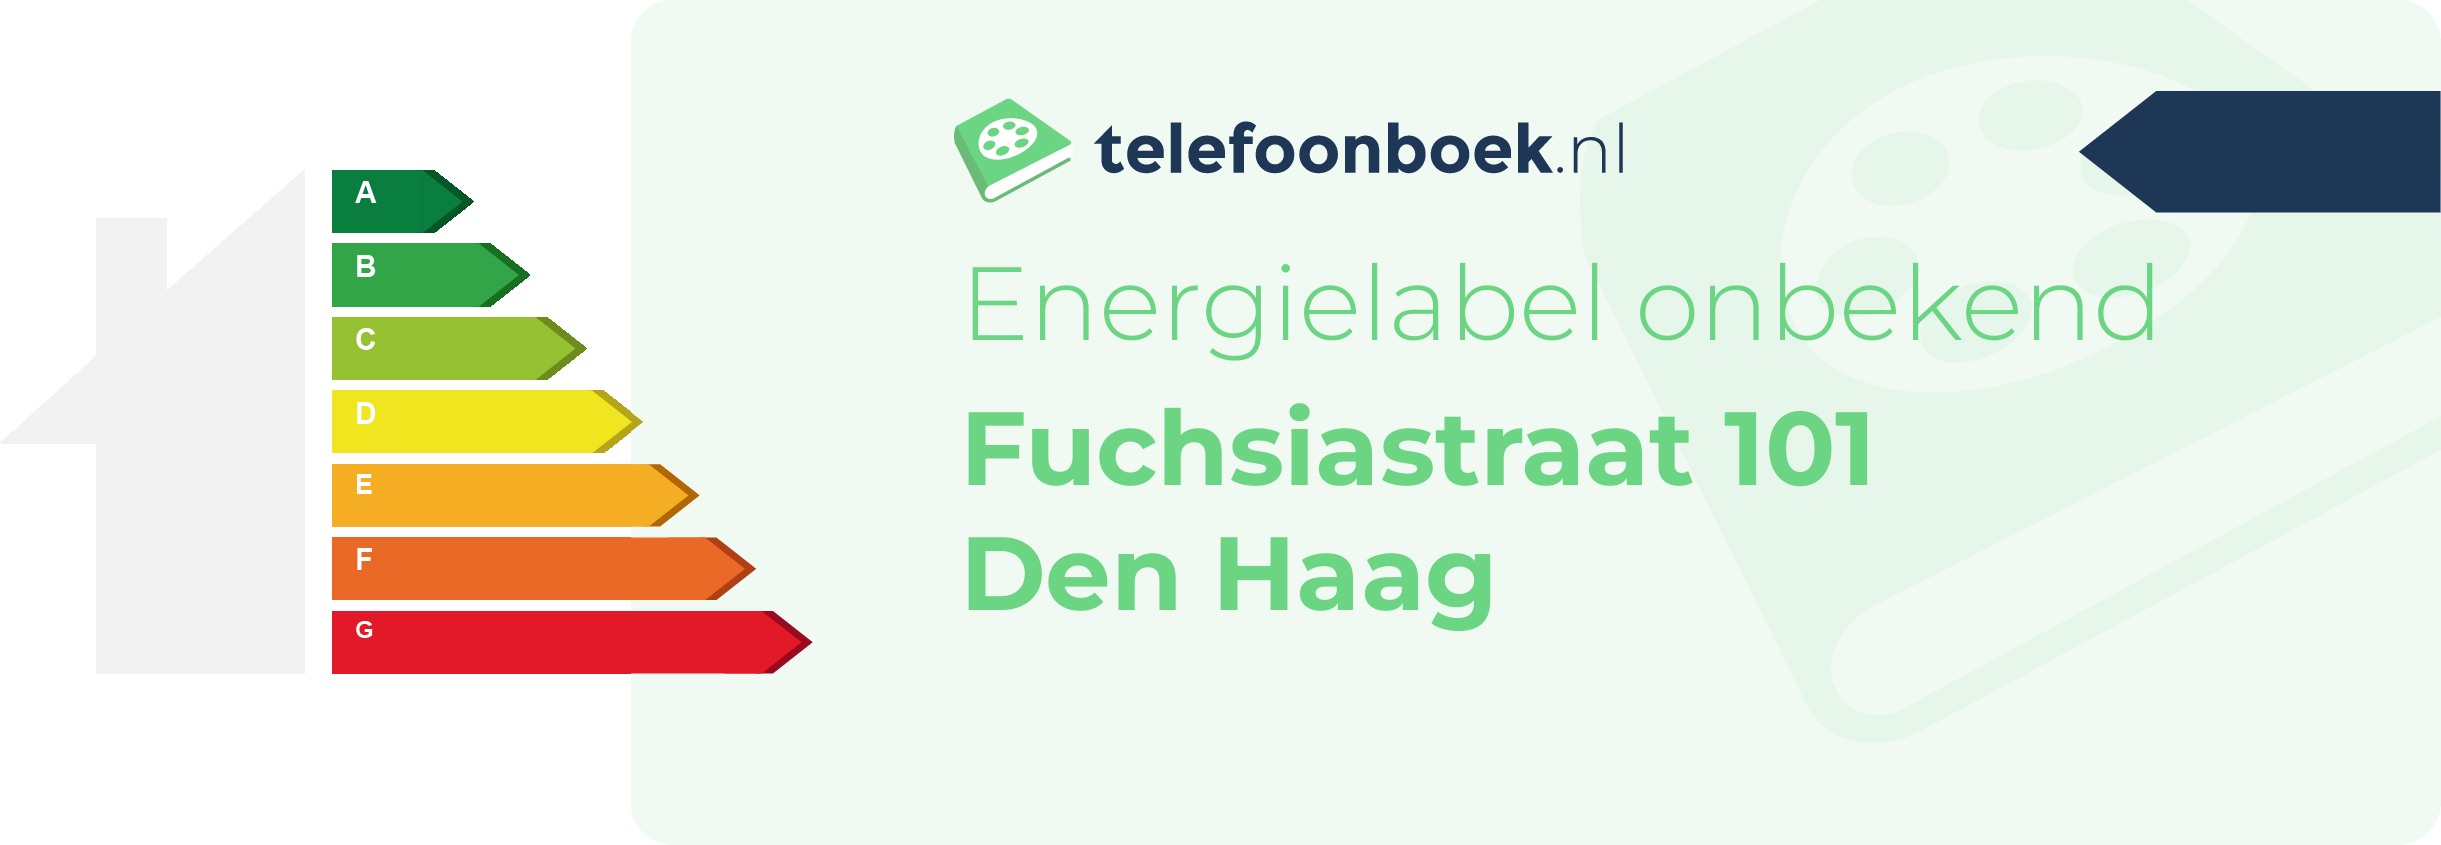 Energielabel Fuchsiastraat 101 Den Haag